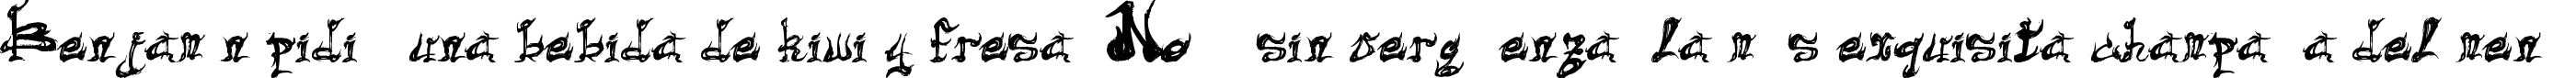 Пример написания шрифтом Dark Flame текста на испанском